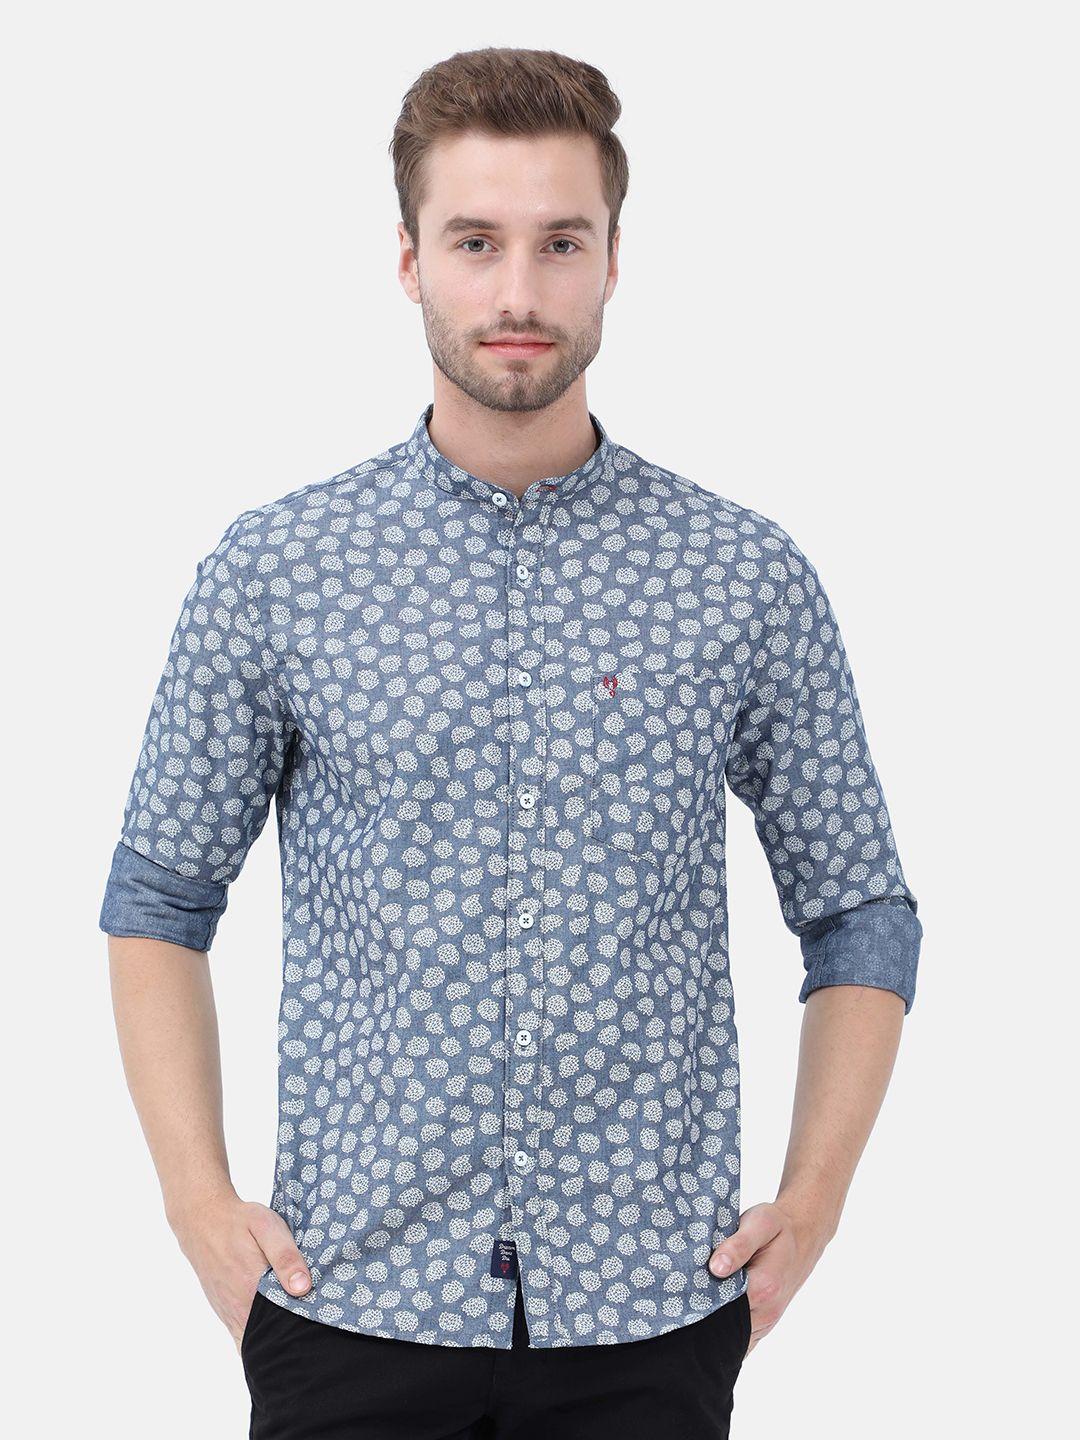 vudu men grey & white comfort floral printed mandarin collar cotton casual shirt